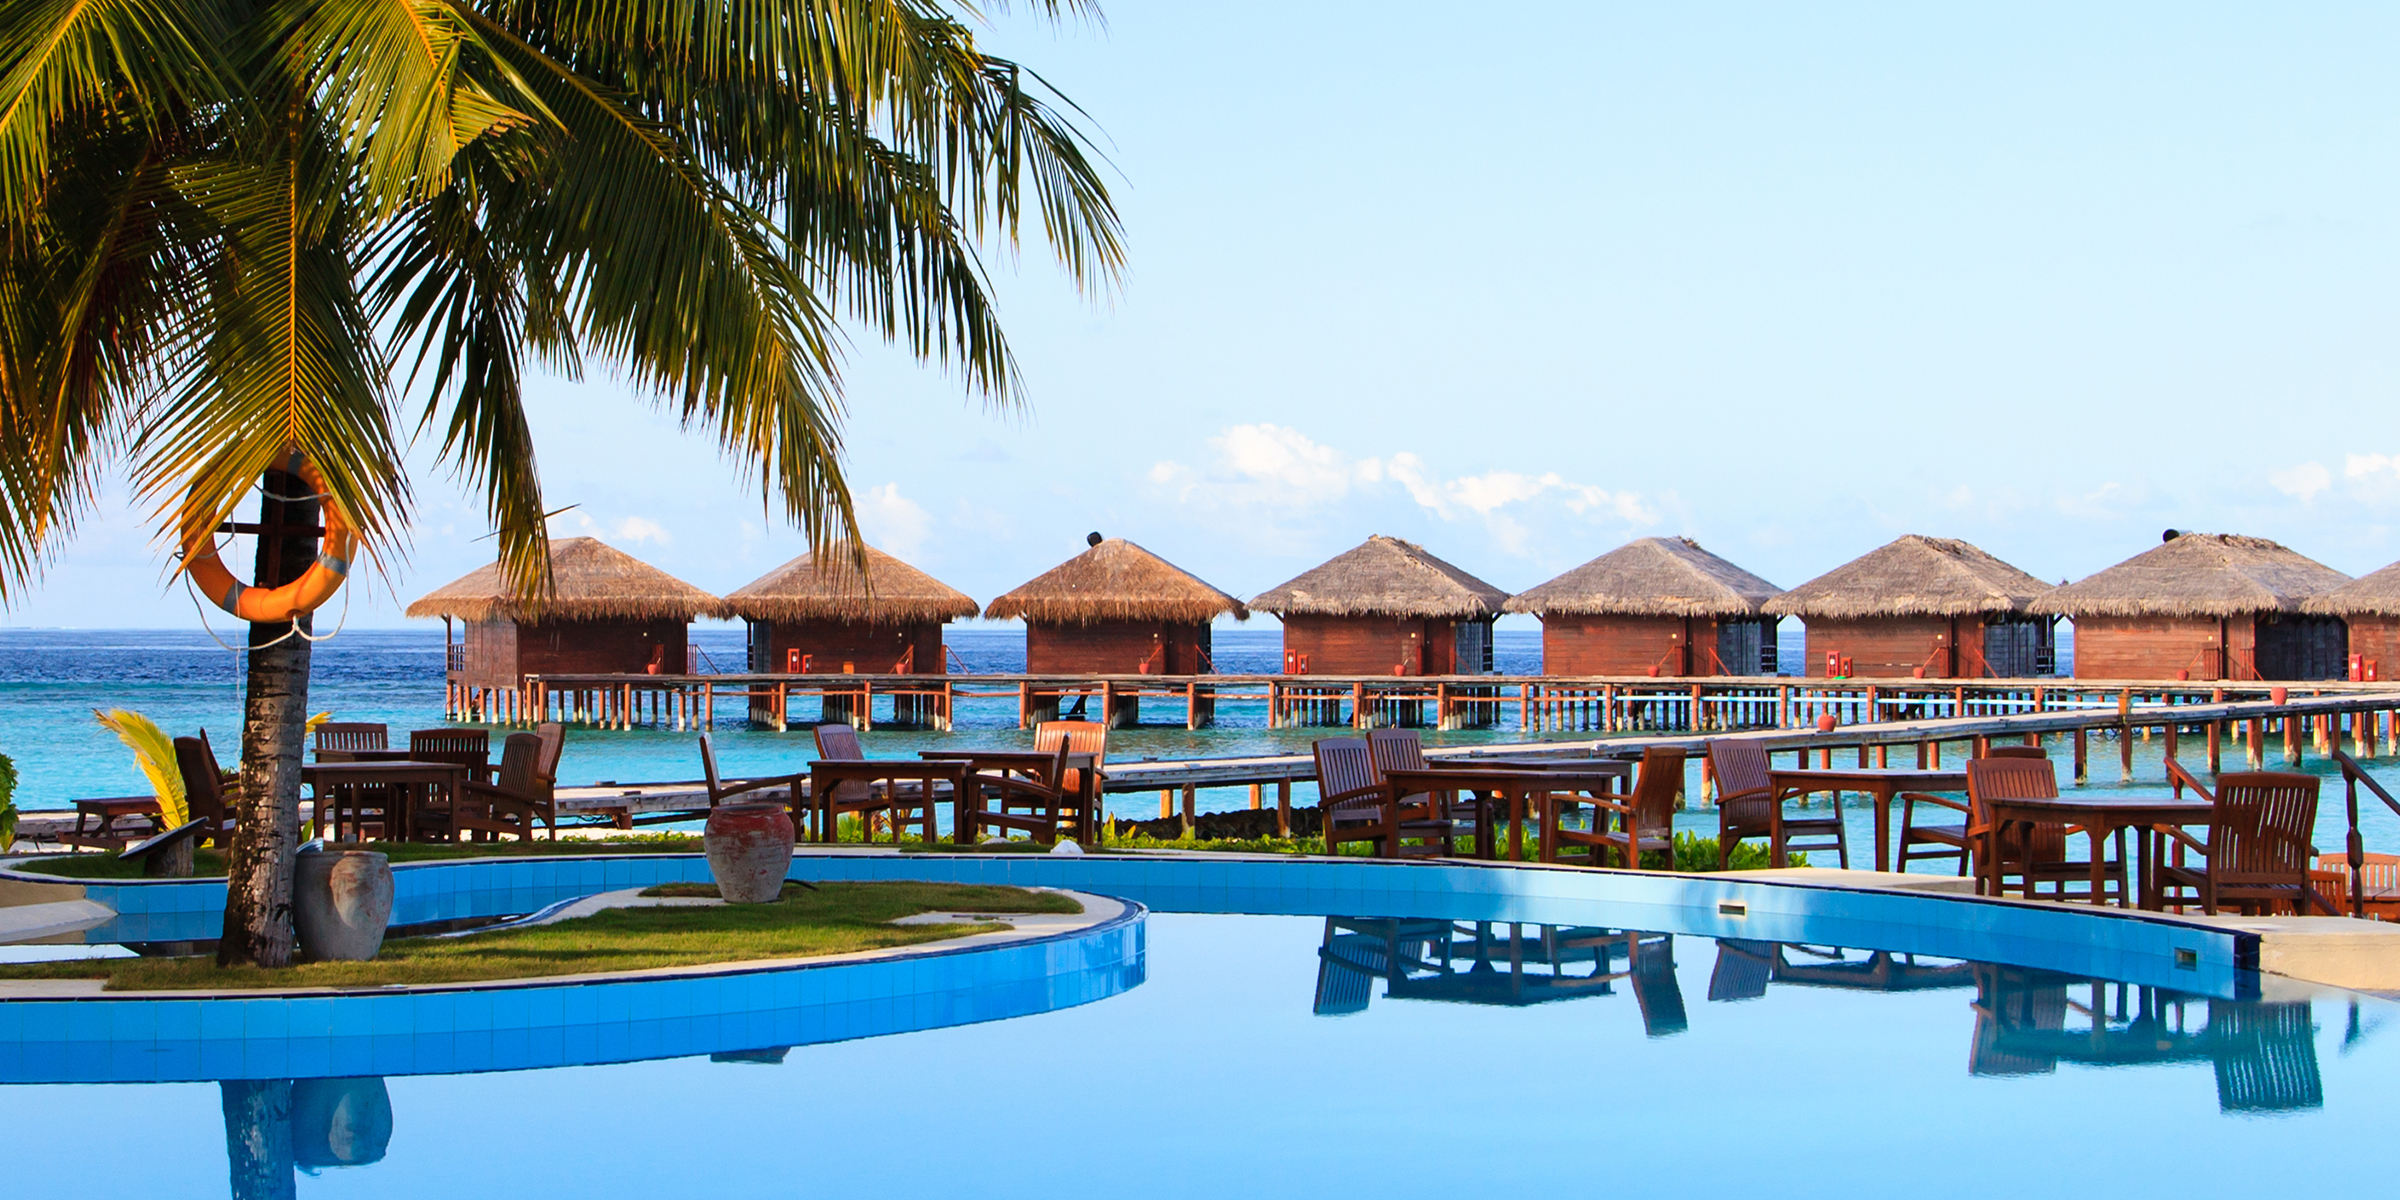 Island resort | Source: Shutterstock